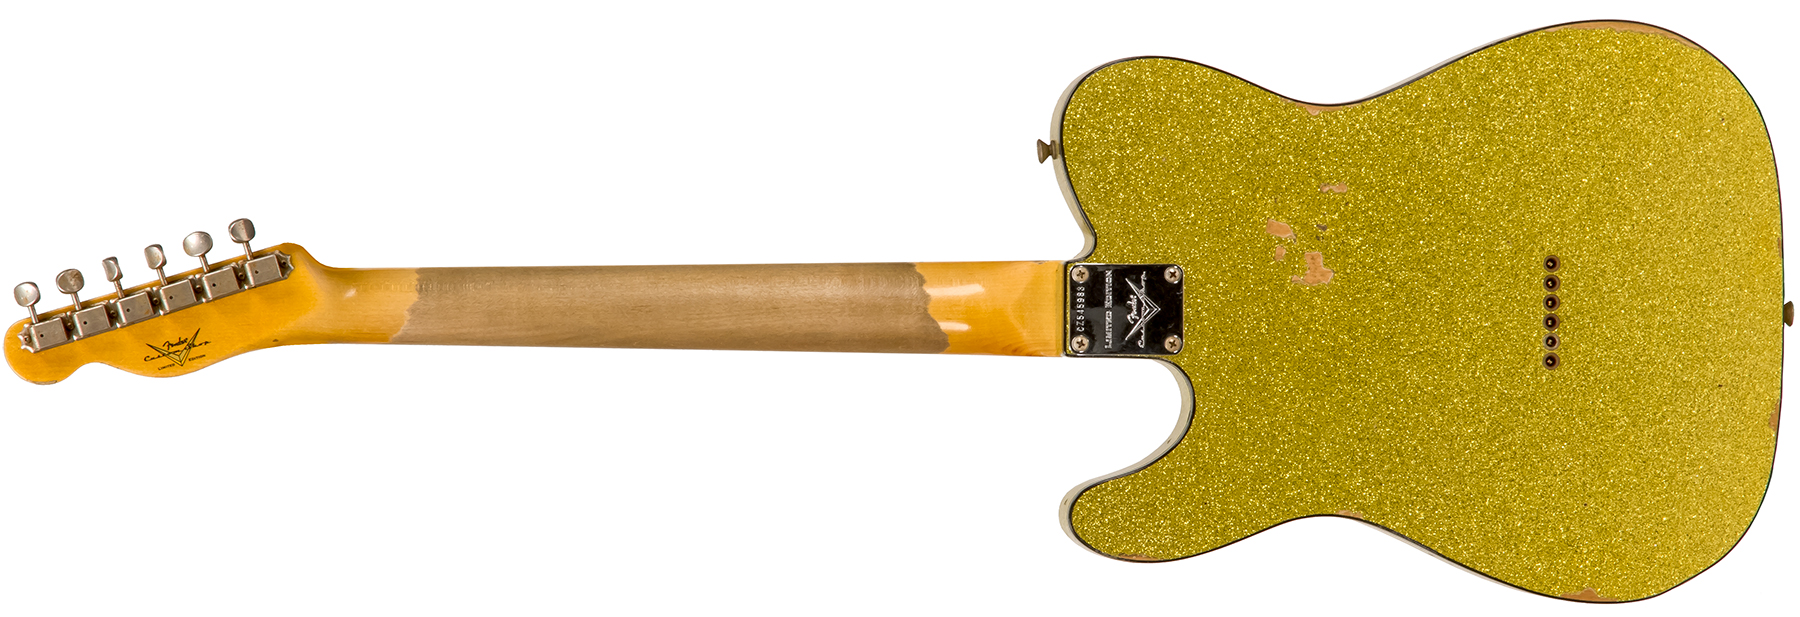 Fender Custom Shop Tele Custom 1963 2020 Ltd Rw #cz545983 - Relic Chartreuse Sparkle - Televorm elektrische gitaar - Variation 1